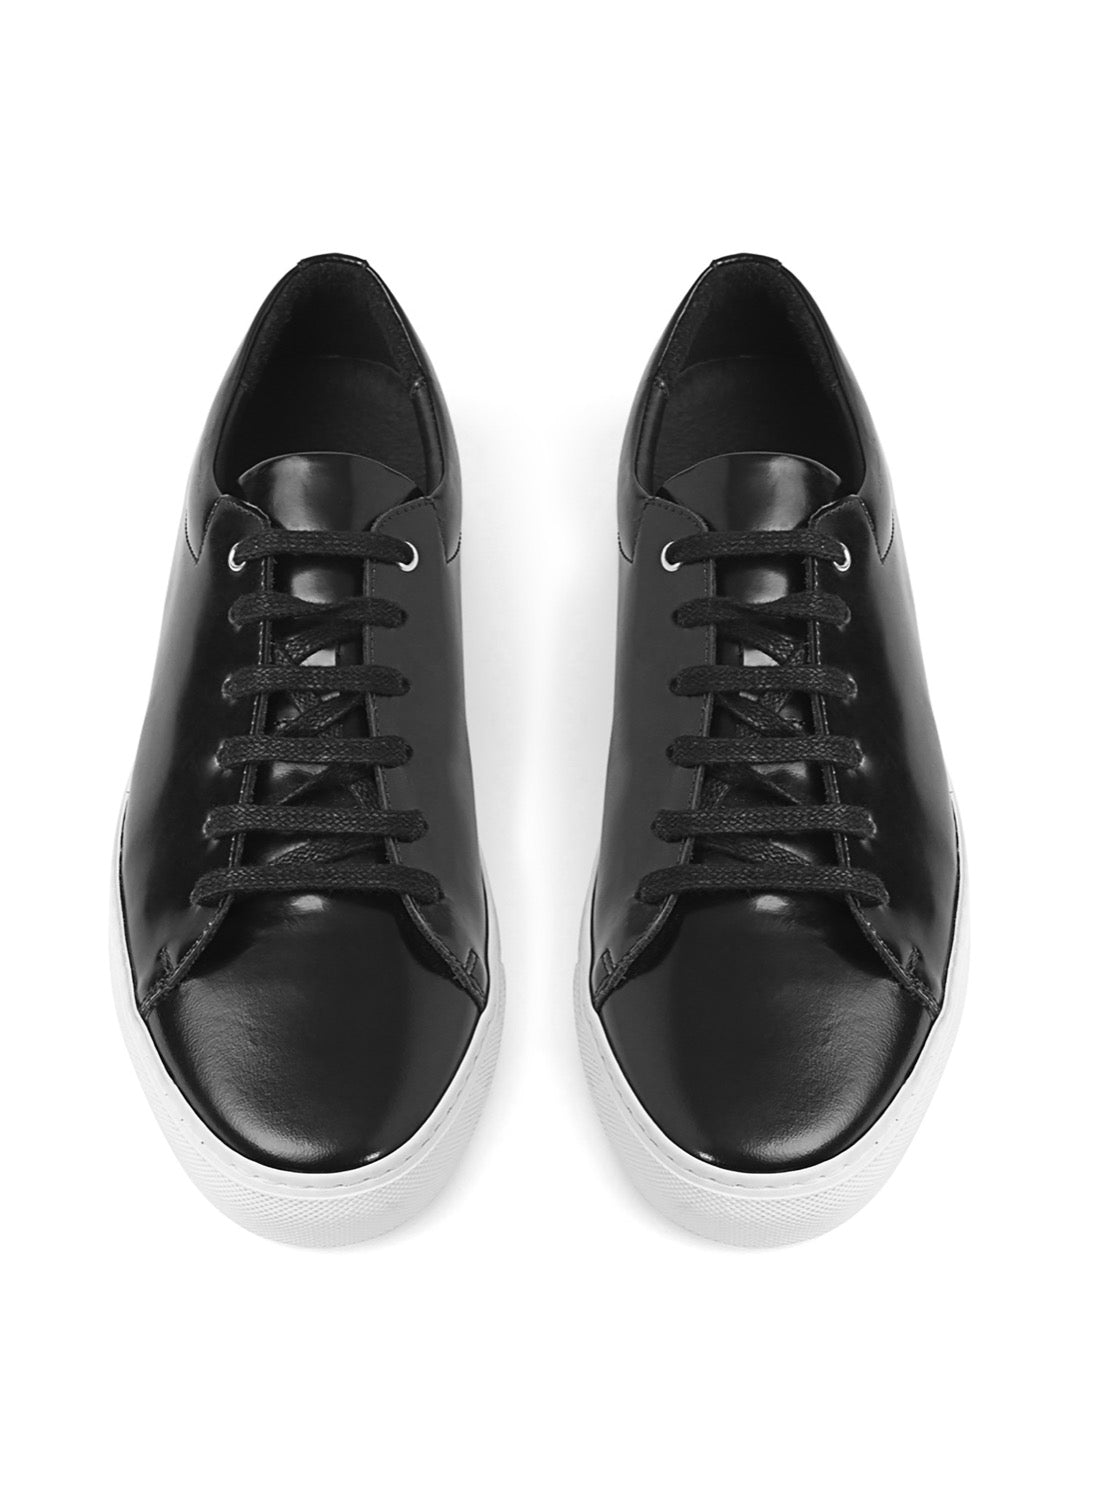 Ace Sneakers Black